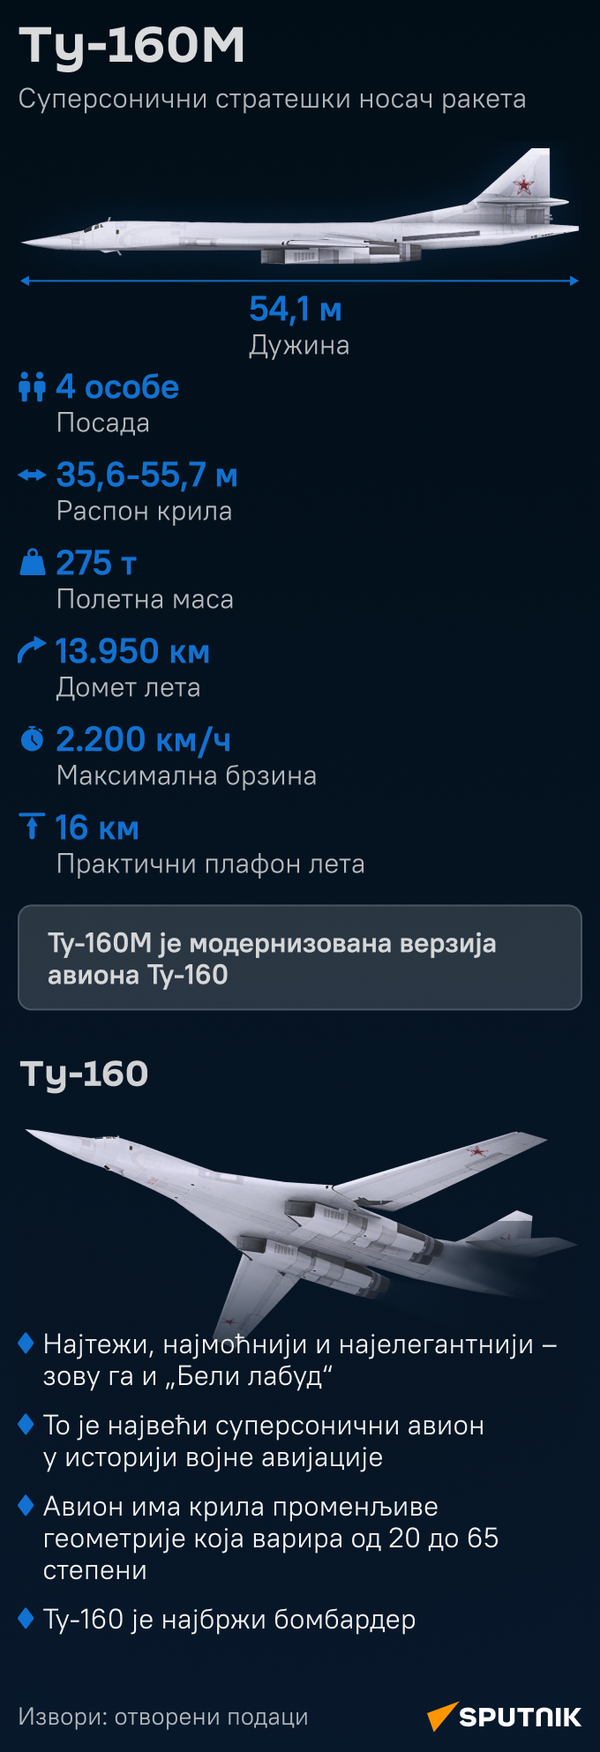 Инфографика Ту-160 моб ЋИР - Sputnik Србија